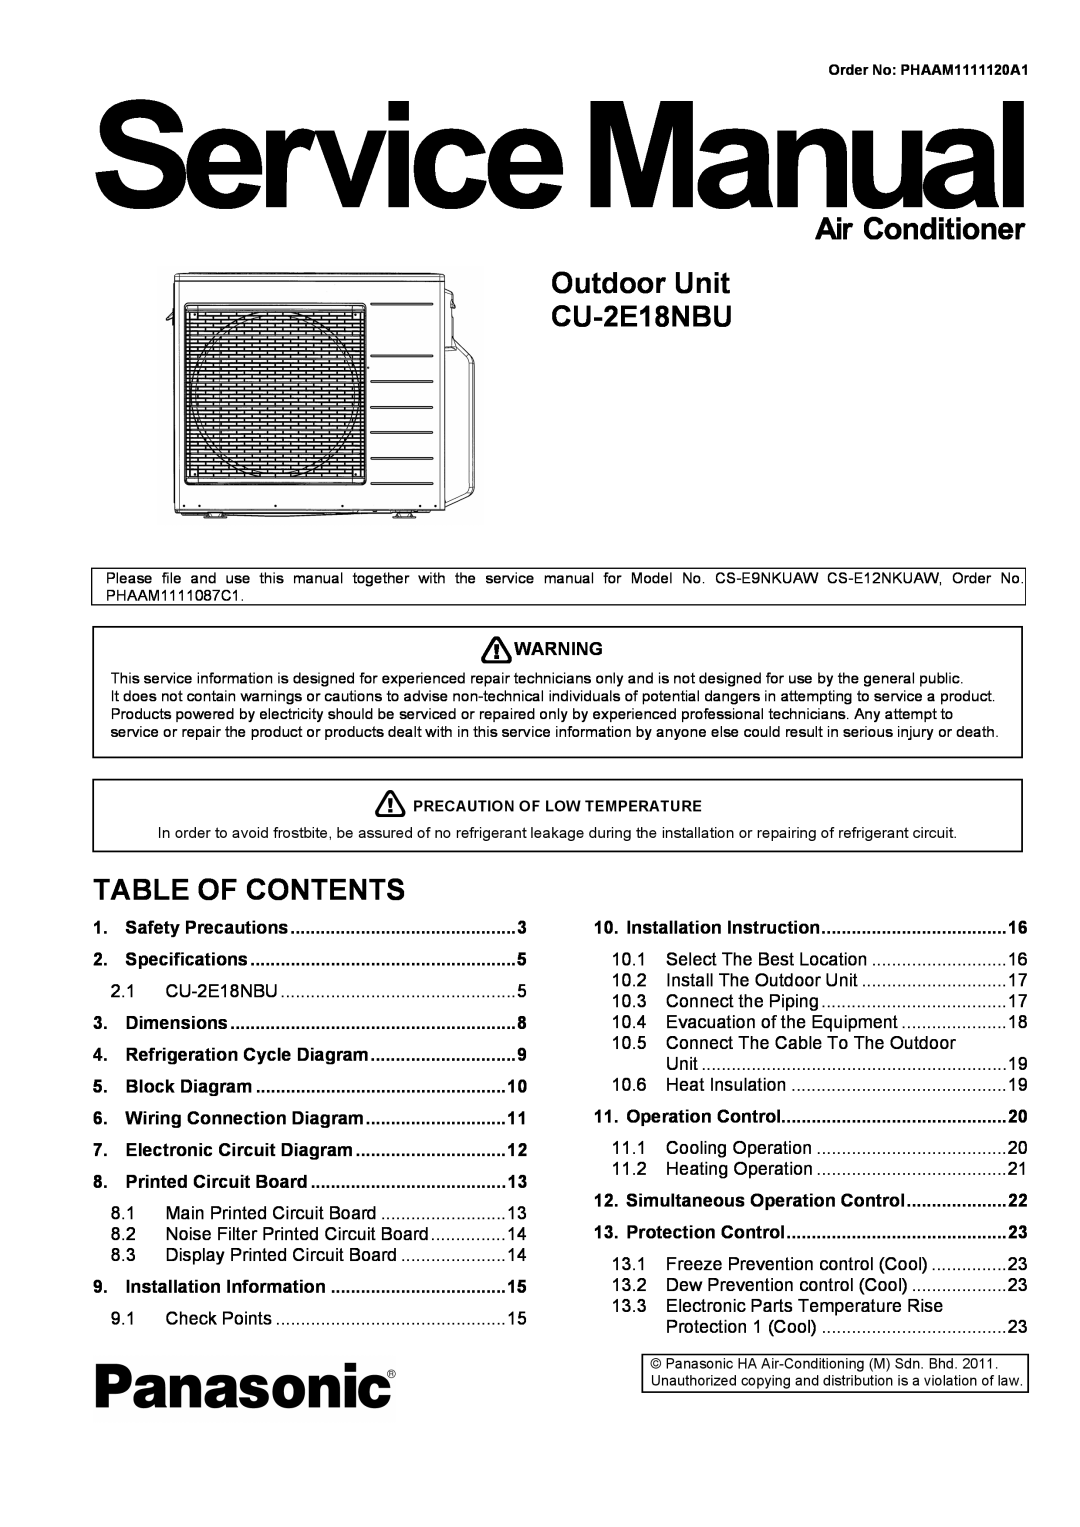 Panasonic service manual Outdoor Unit CU-2E18NBU, Table Of Contents 